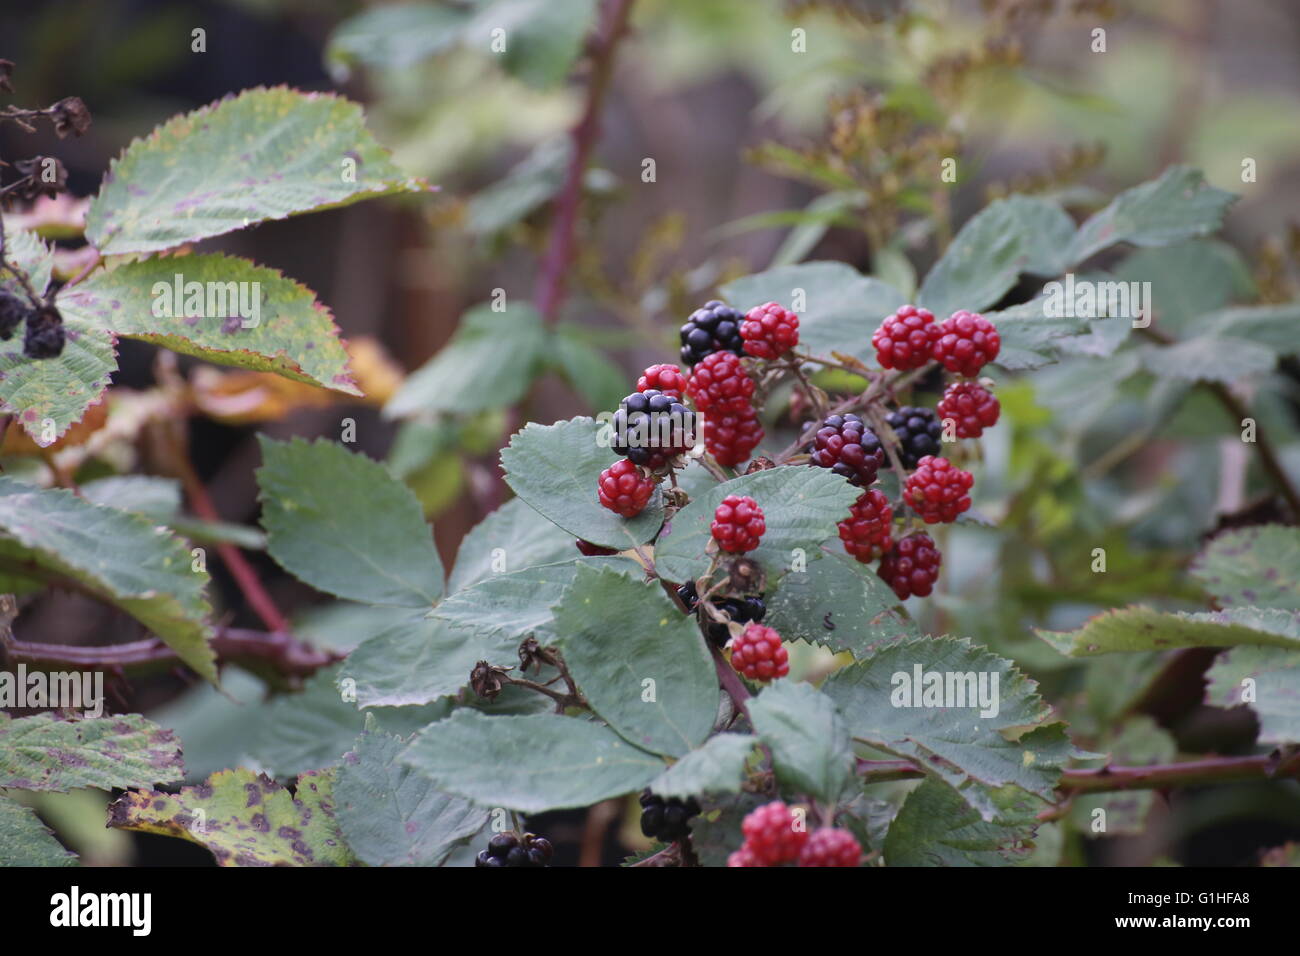 Ripe and red unripe blackberries (Rubus). Stock Photo